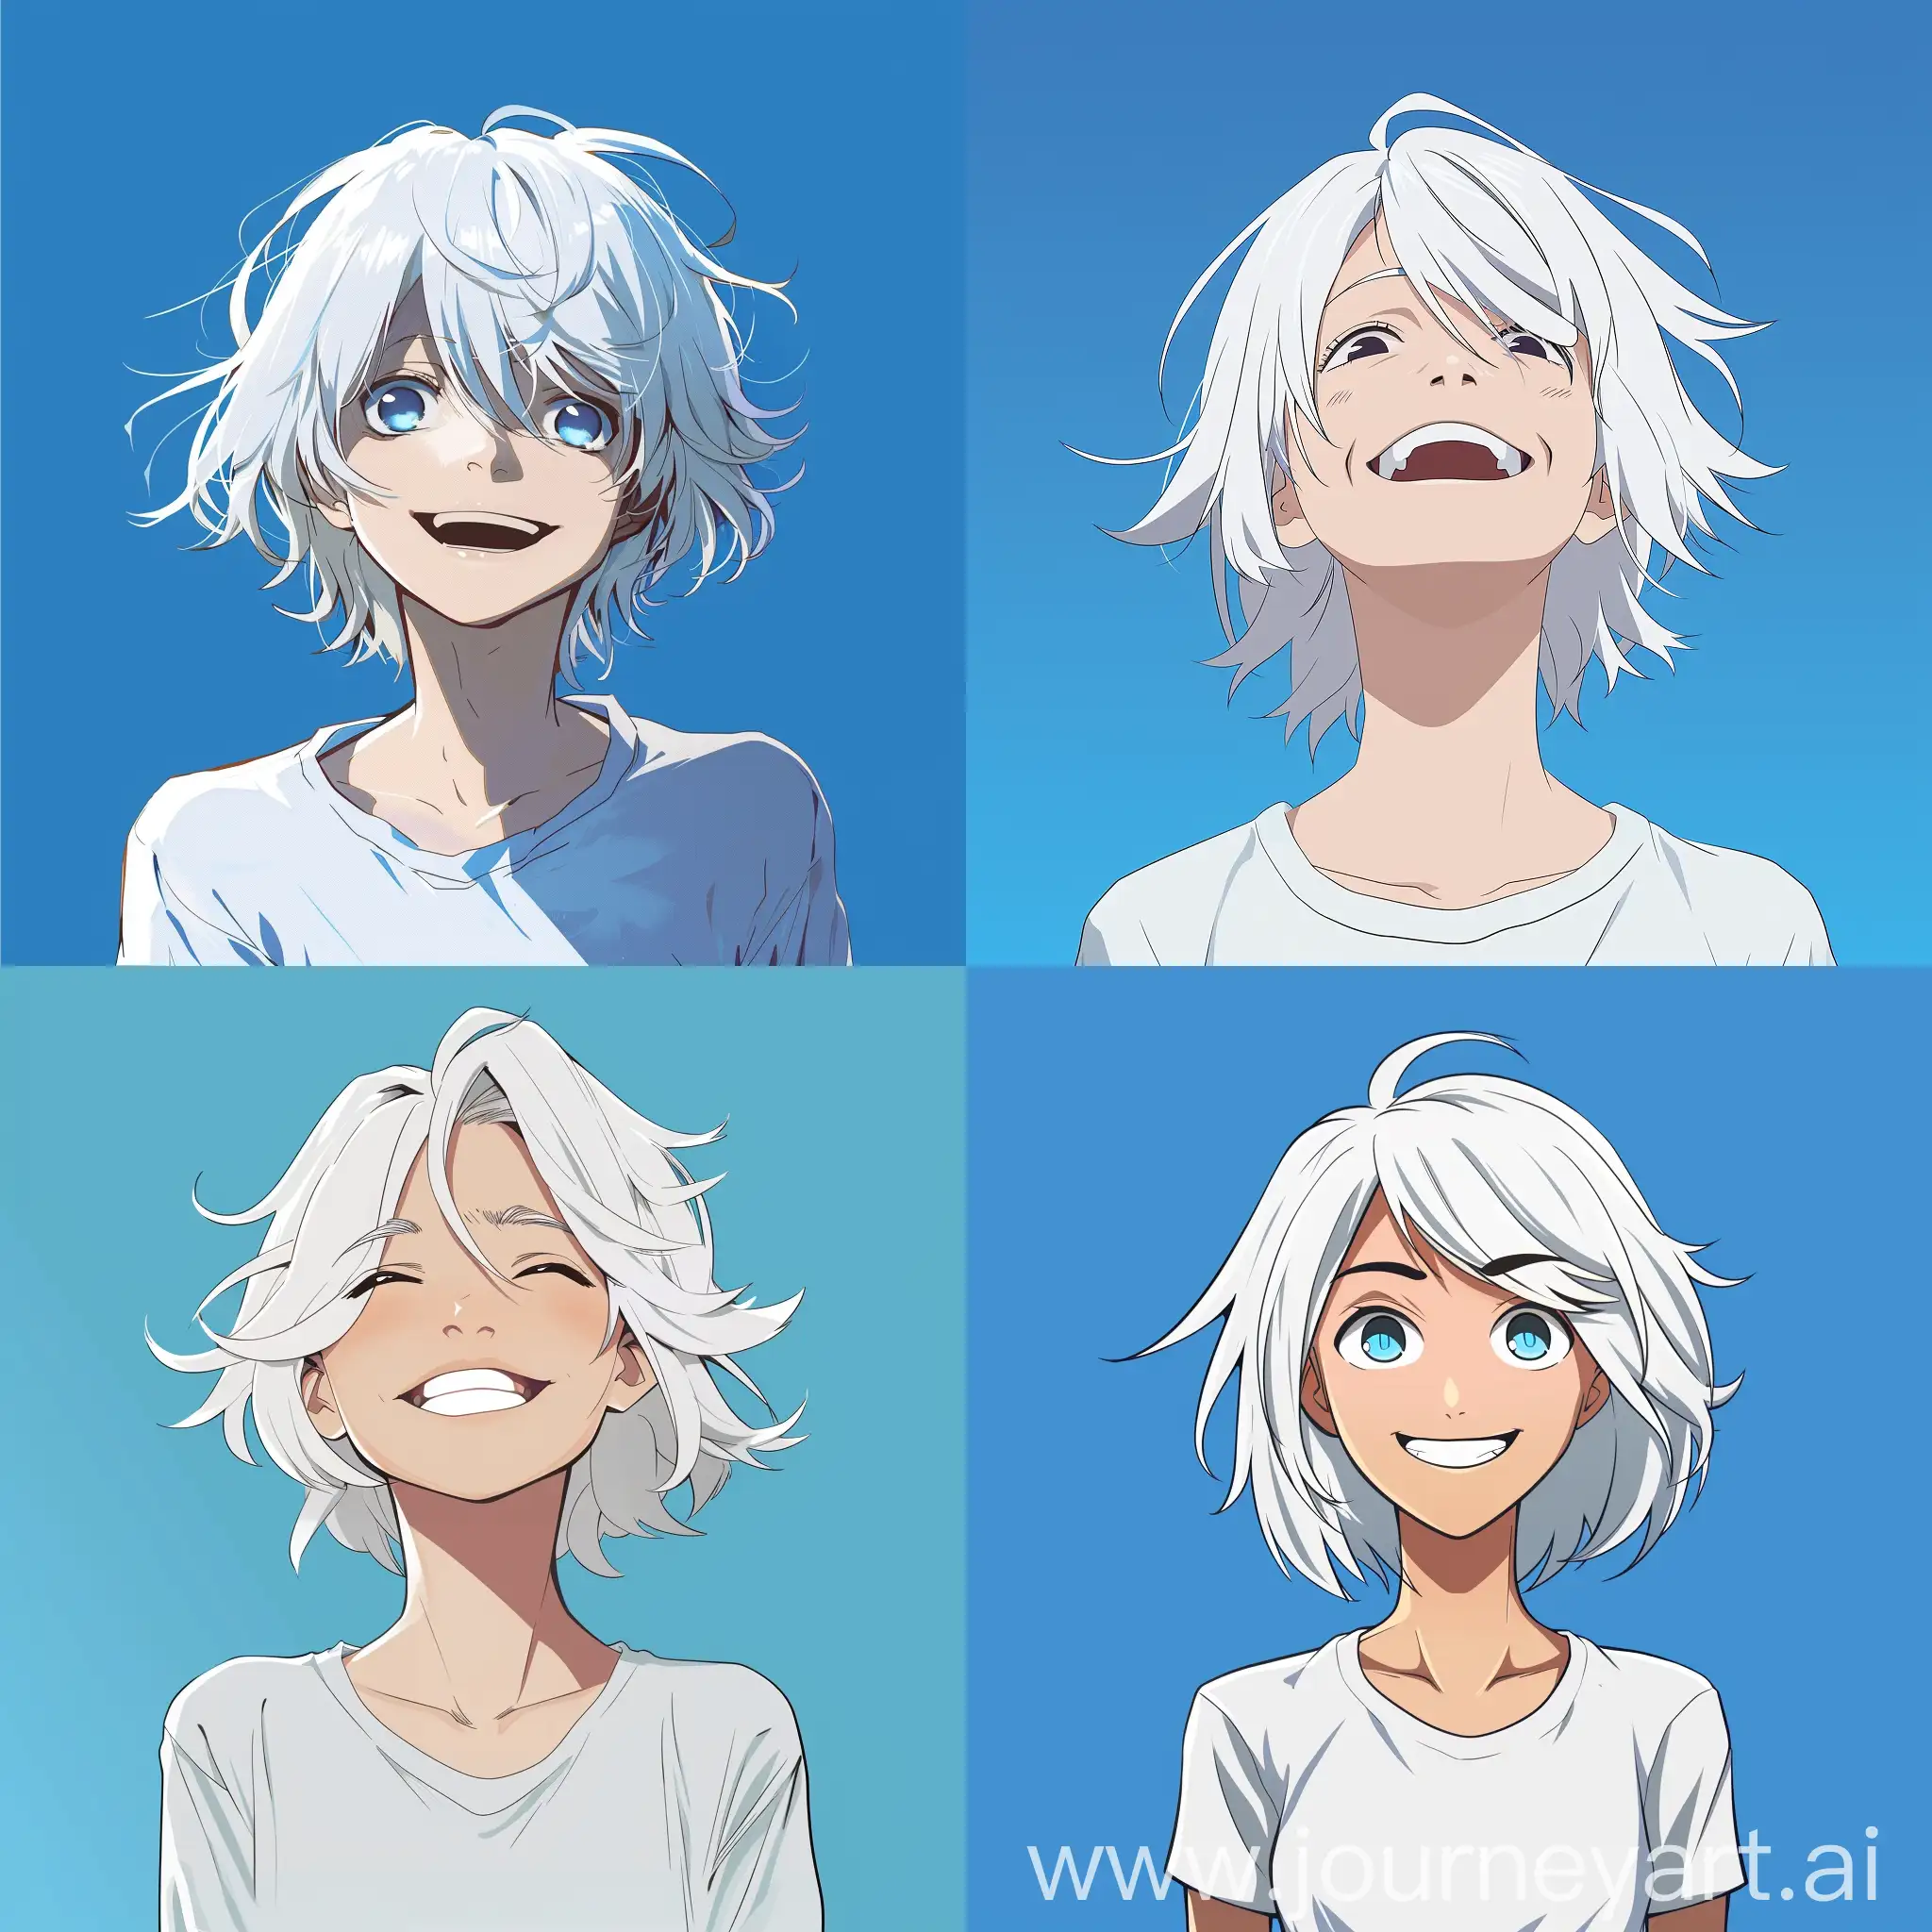 Joyful-Anime-Character-Smiling-Behind-Blue-Fond